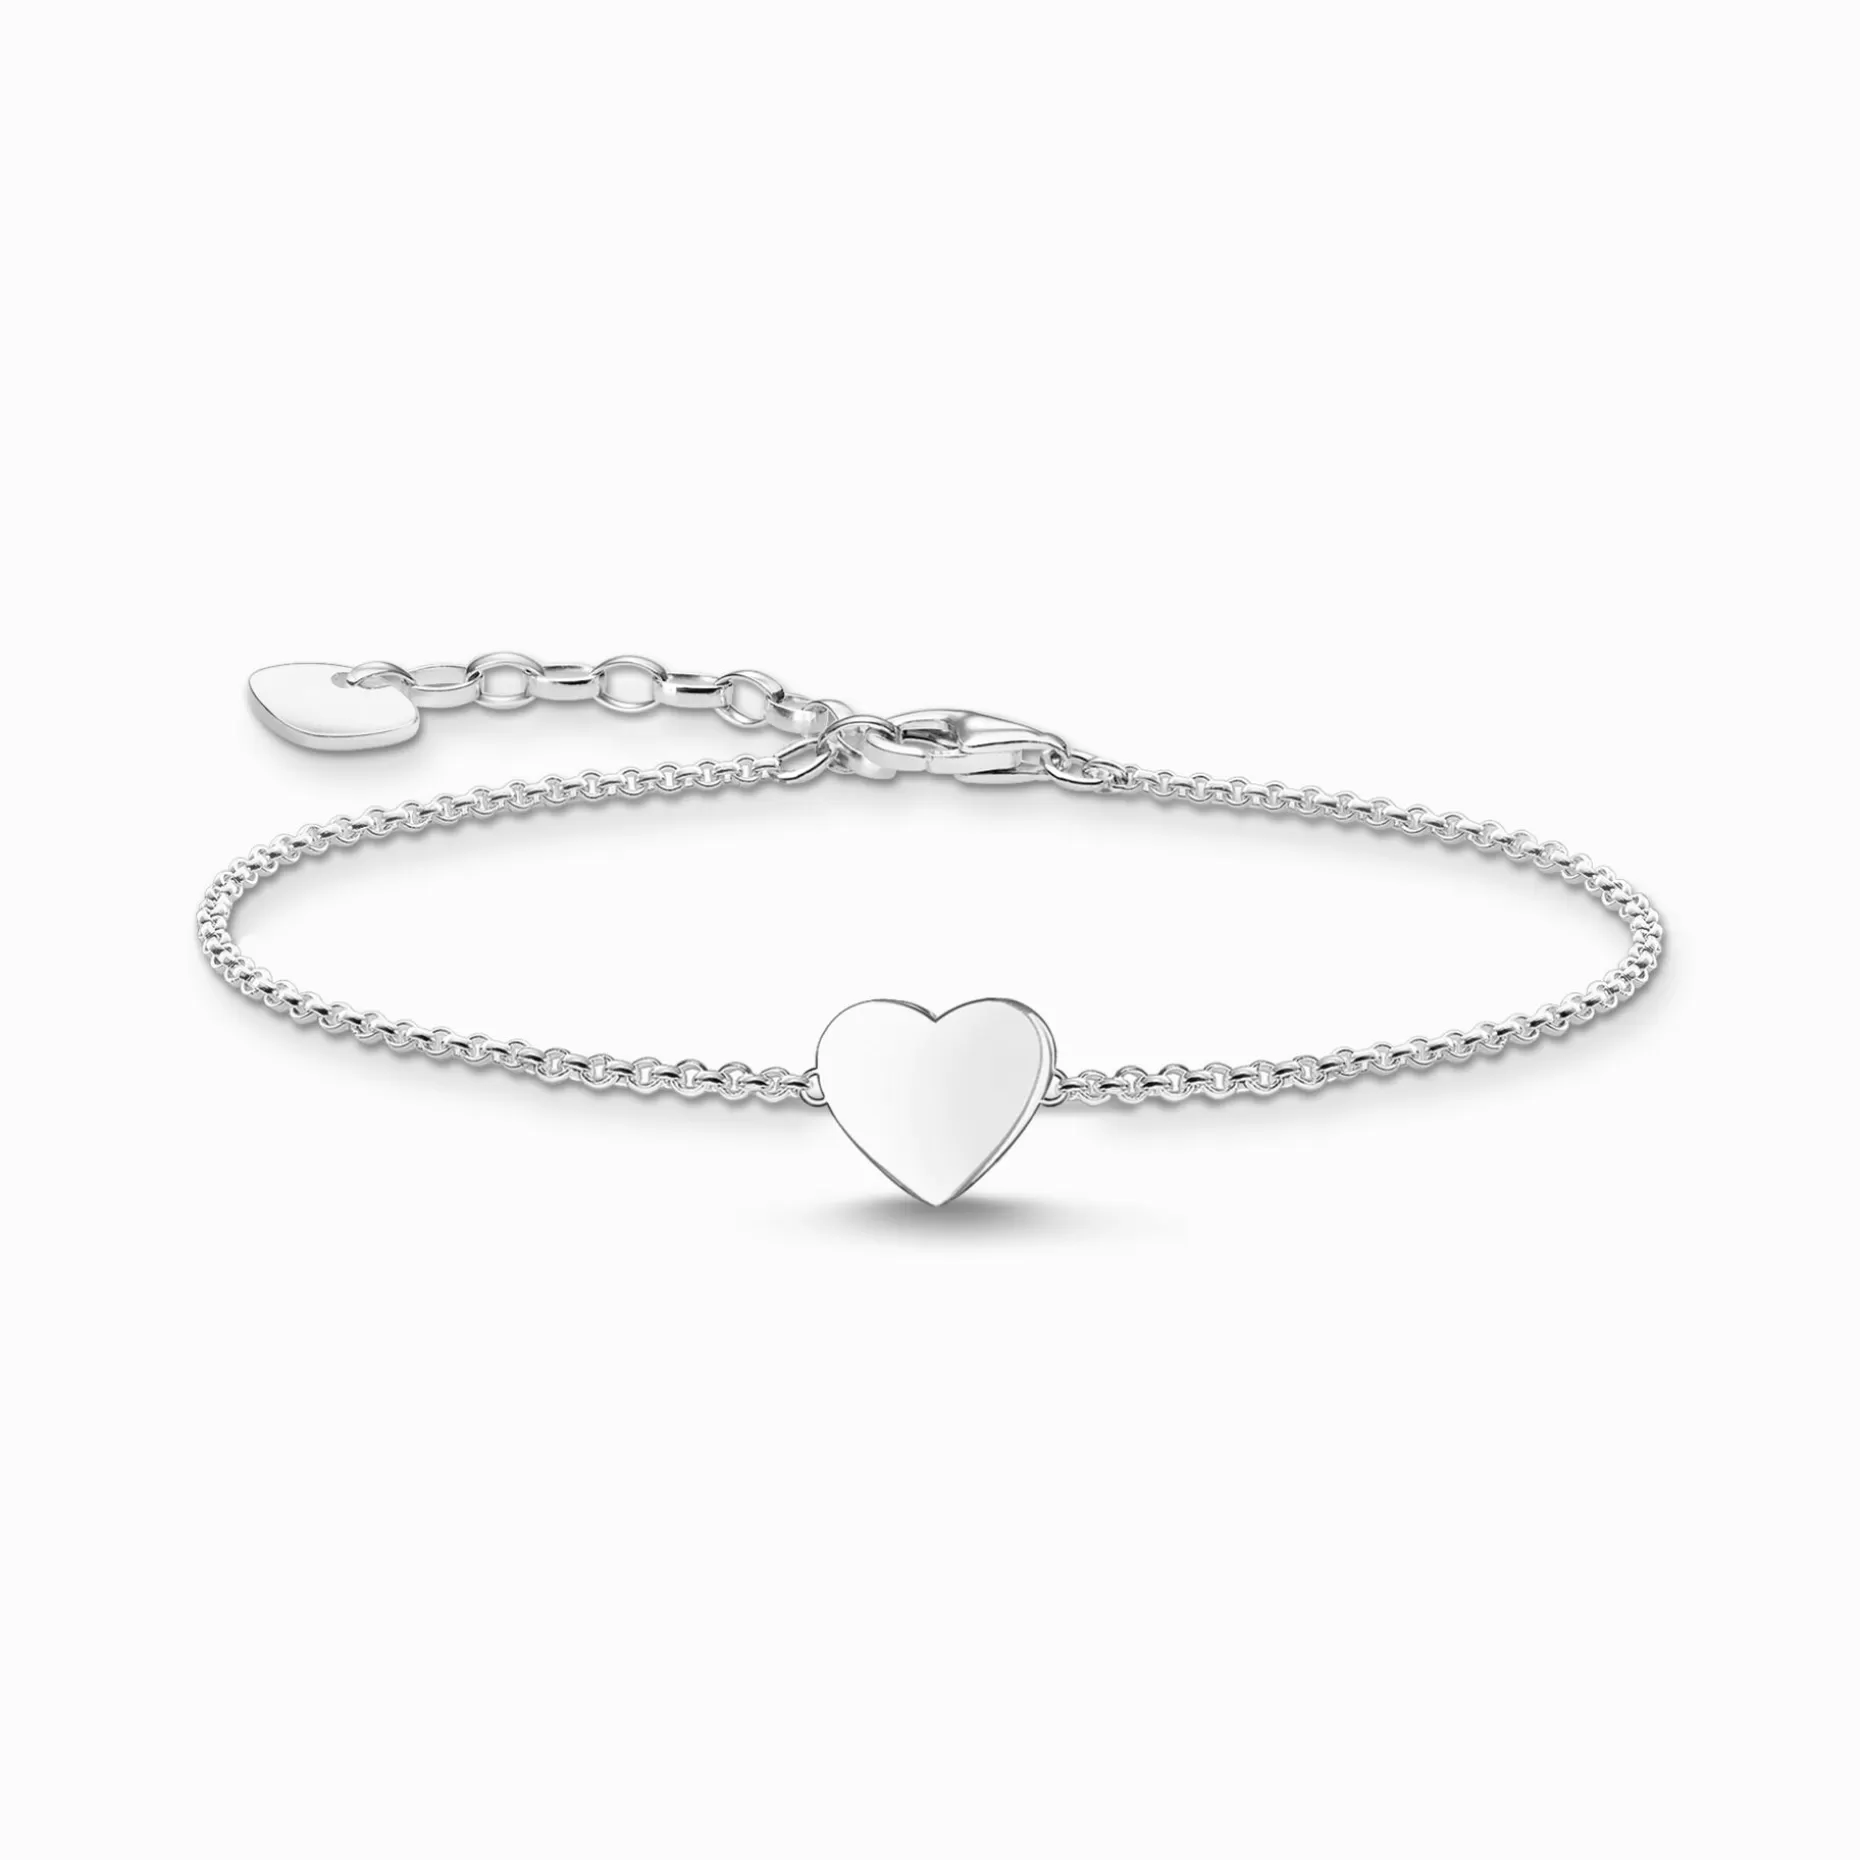 THOMAS SABO Bracelet heart silver silver-coloured Sale